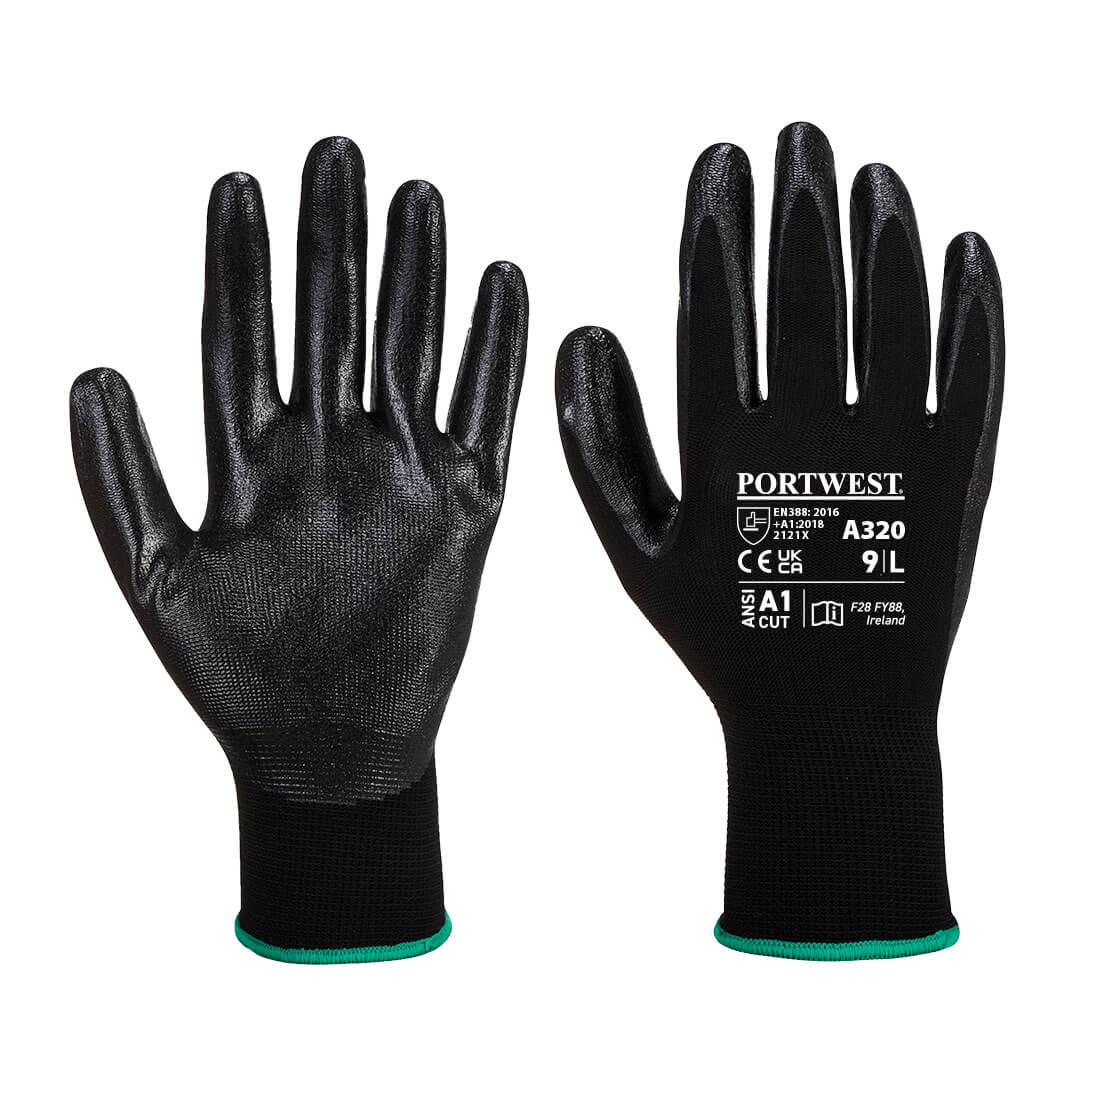 A310 Portwest® Dexti-Grip Nitrile Foam Coated Work Gloves